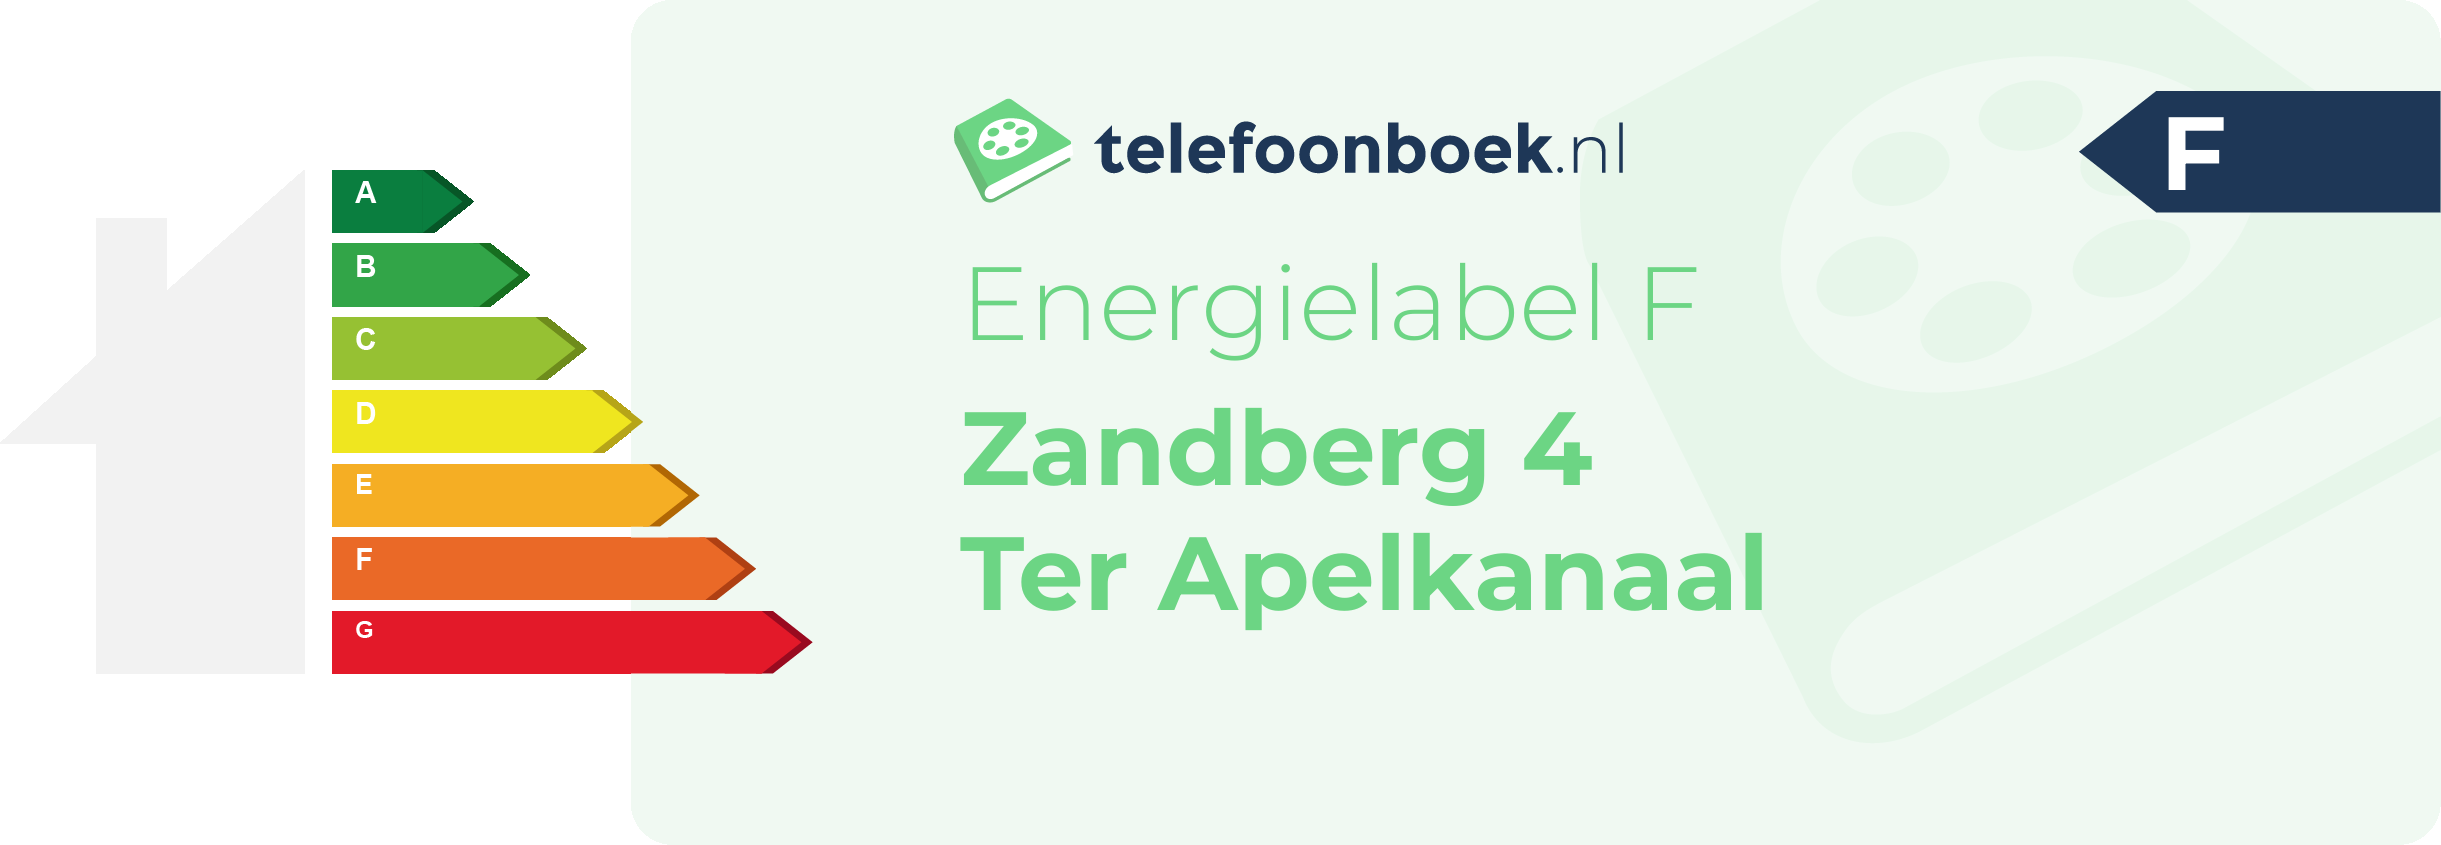 Energielabel Zandberg 4 Ter Apelkanaal